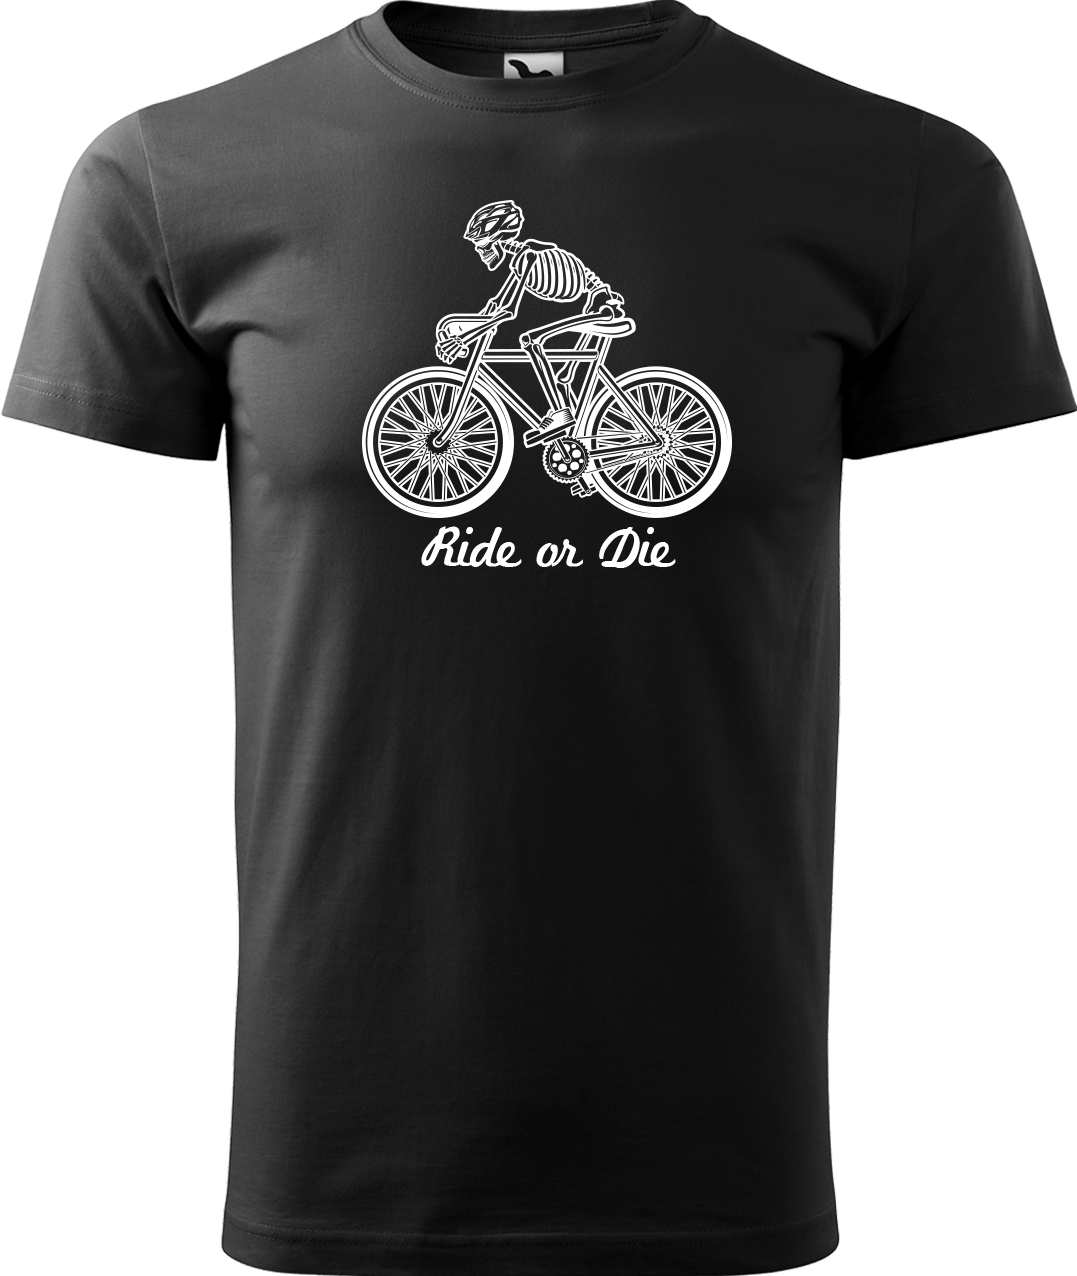 Pánské tričko pro cyklistu - Ride or Die Velikost: S, Barva: Černá (01)